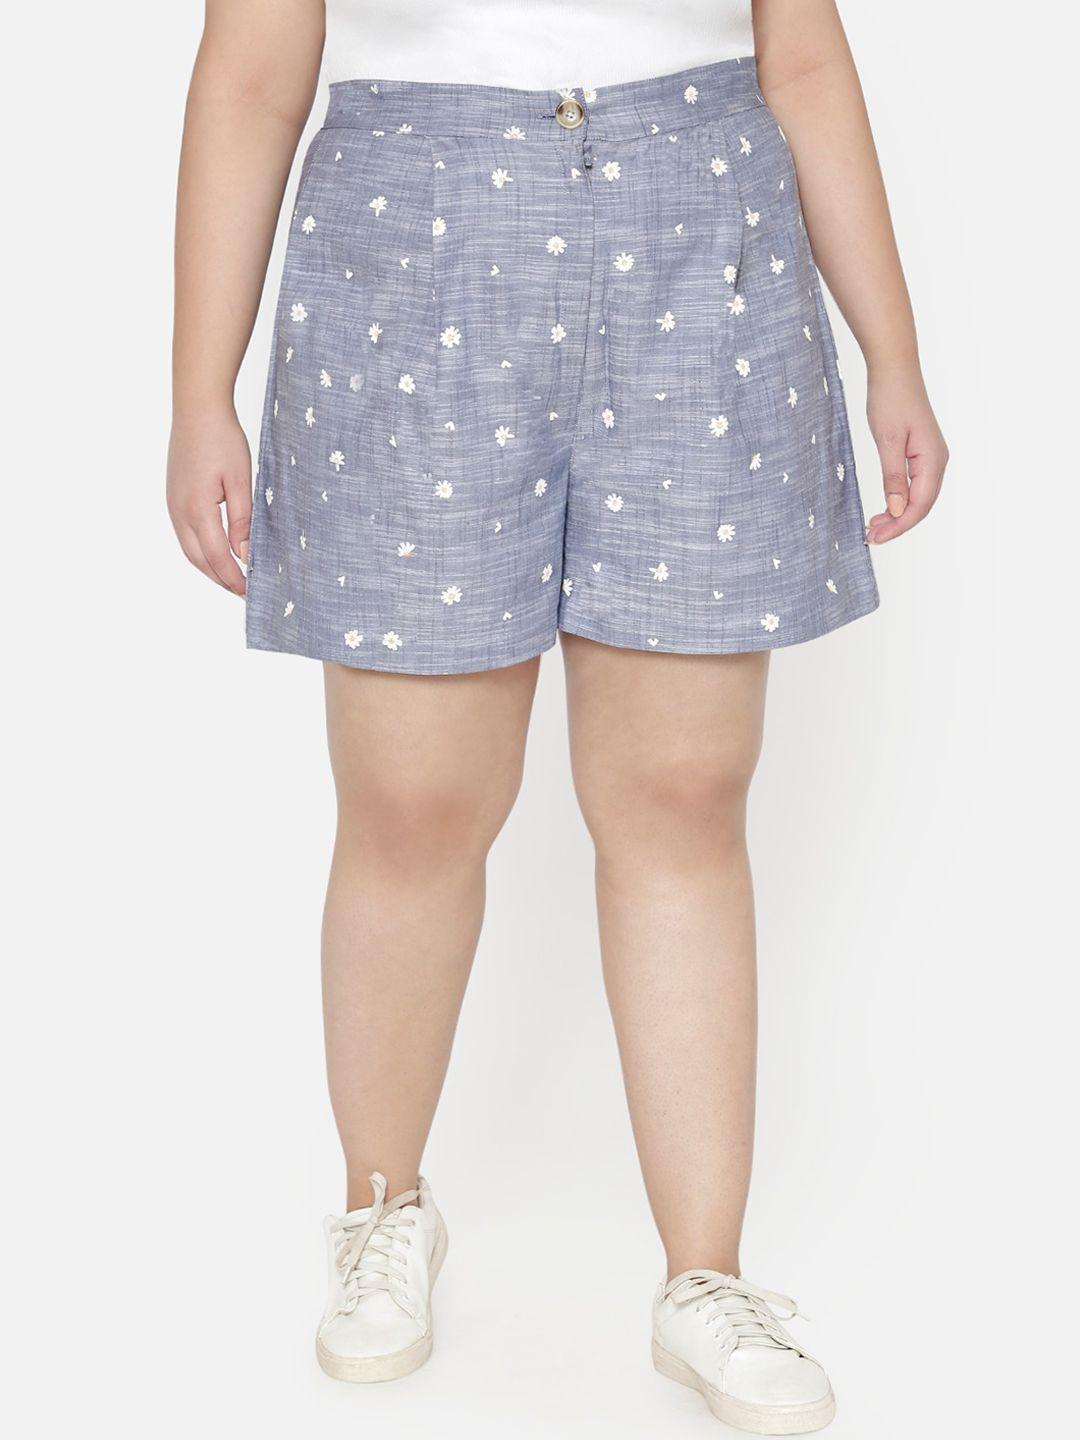 wild u plus size women blue conversational printed loose fit shorts